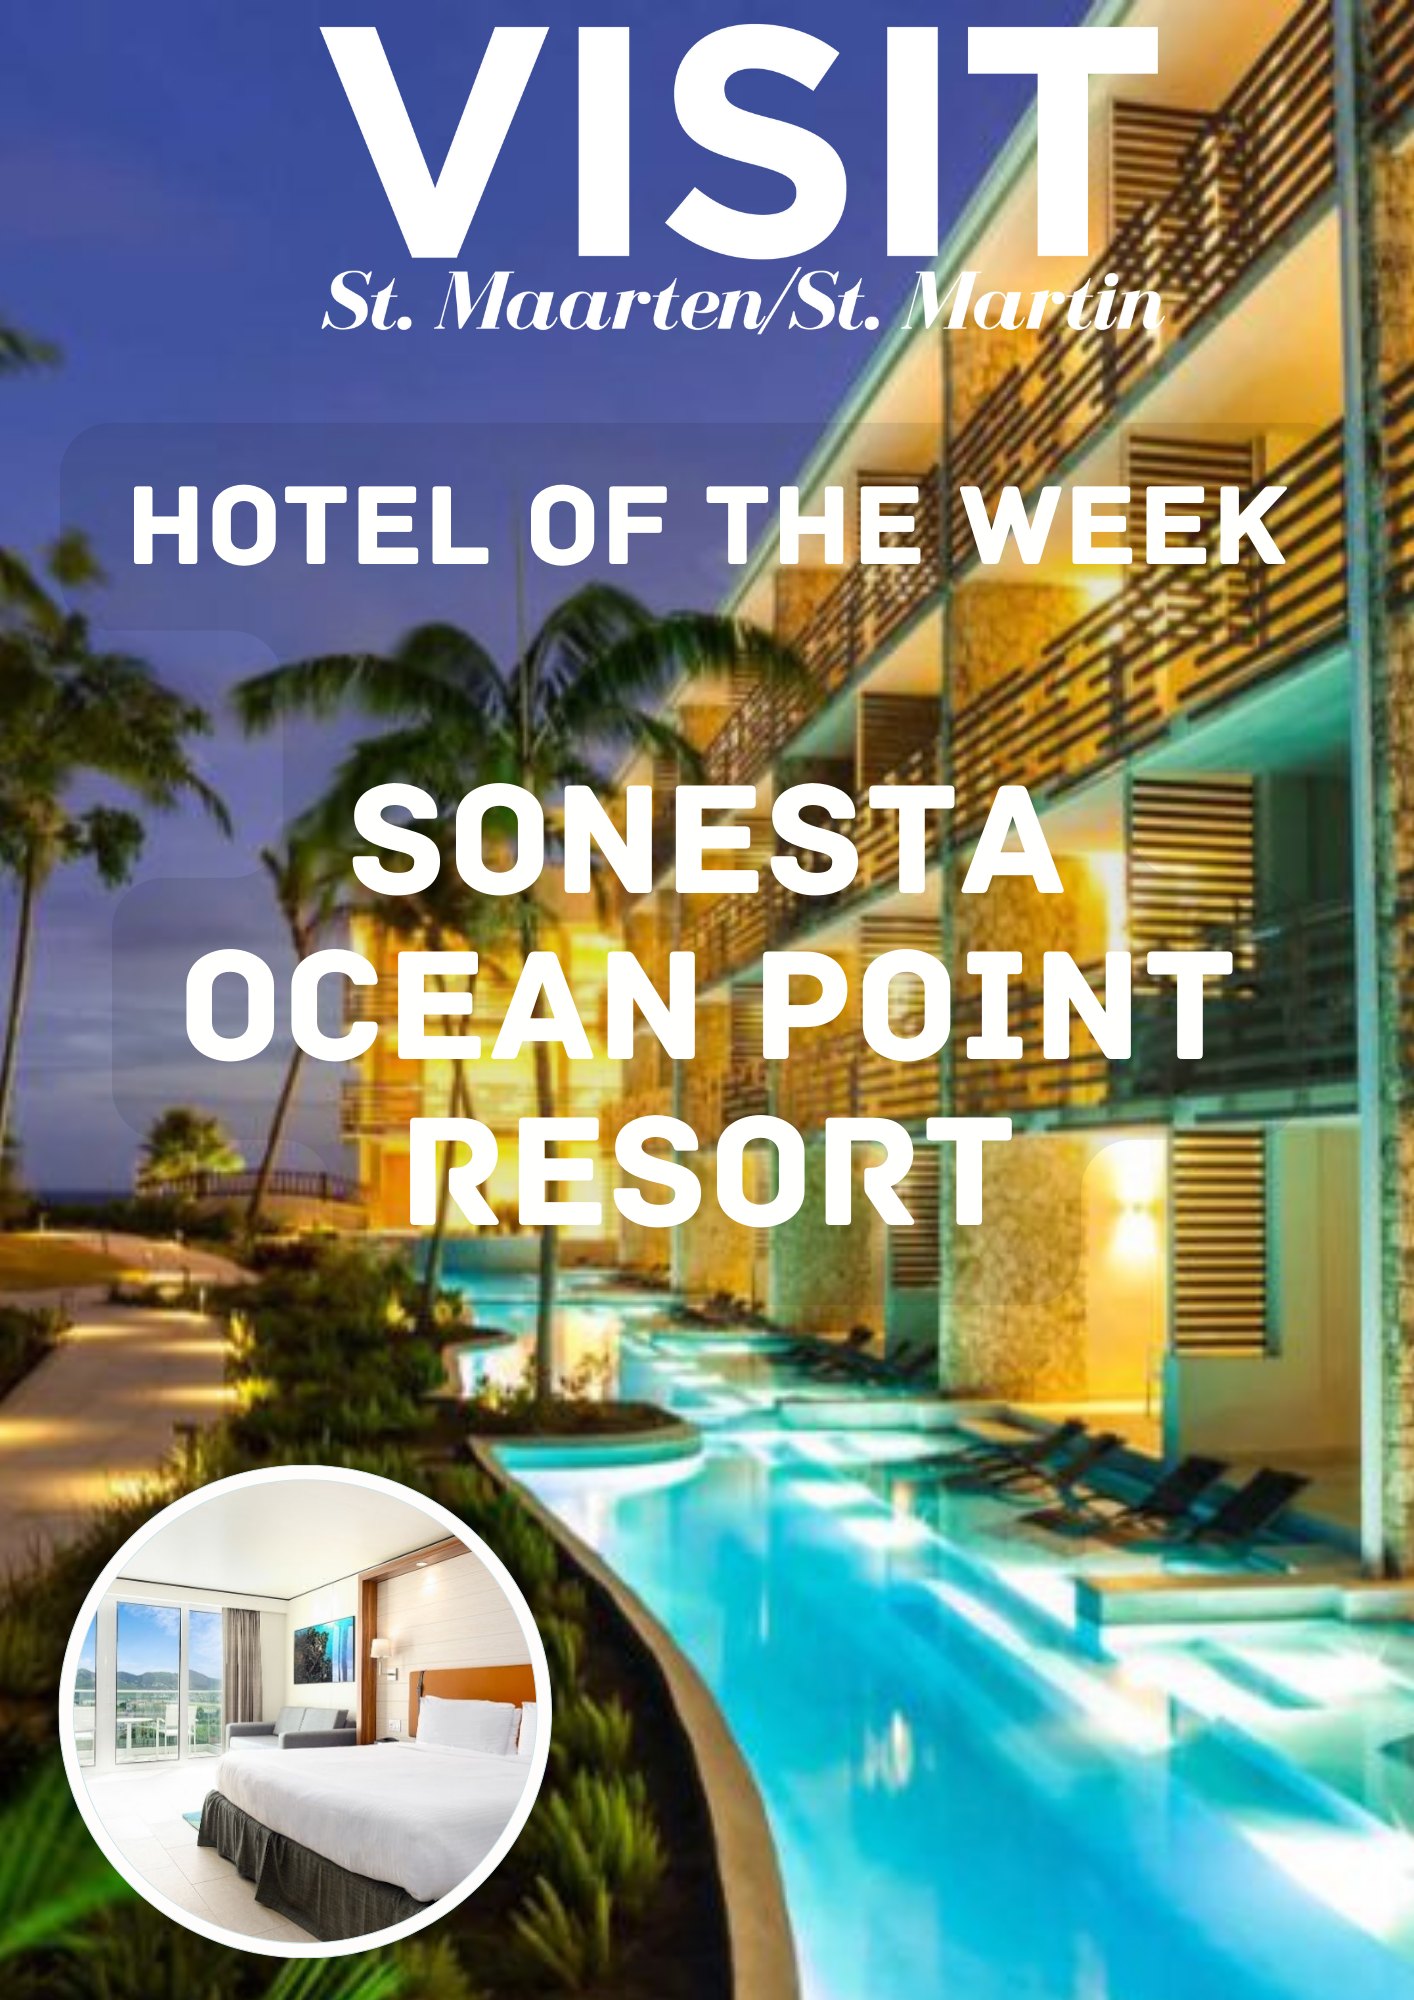 Hotel of the week, Sonesta Ocean Point Resort, St Maarten, St Martyn